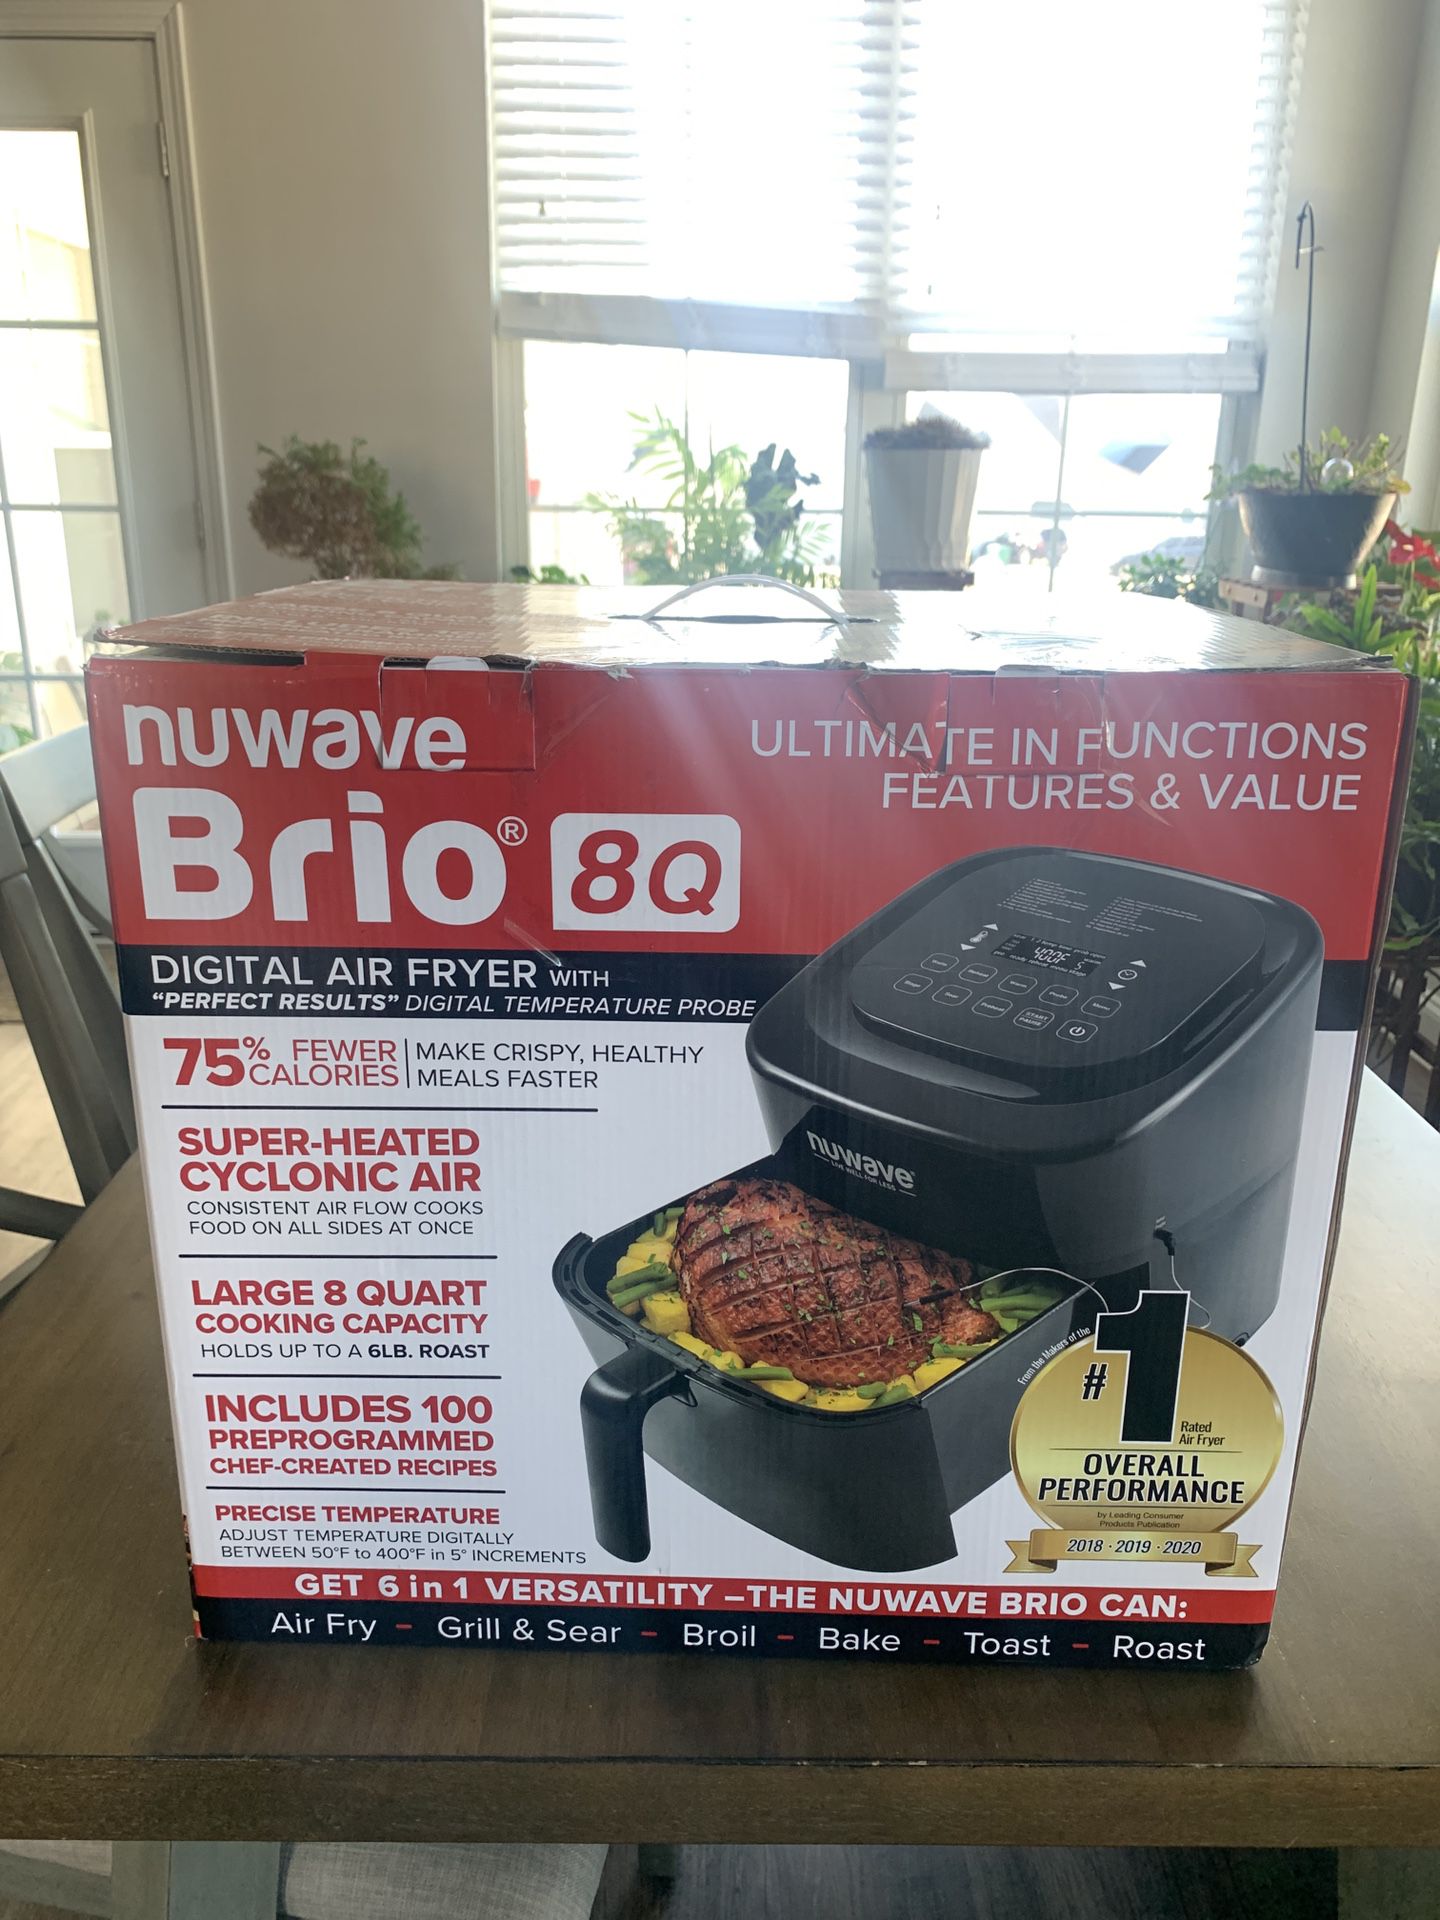 Digital Air Fryer Nuwave Brio 8q 